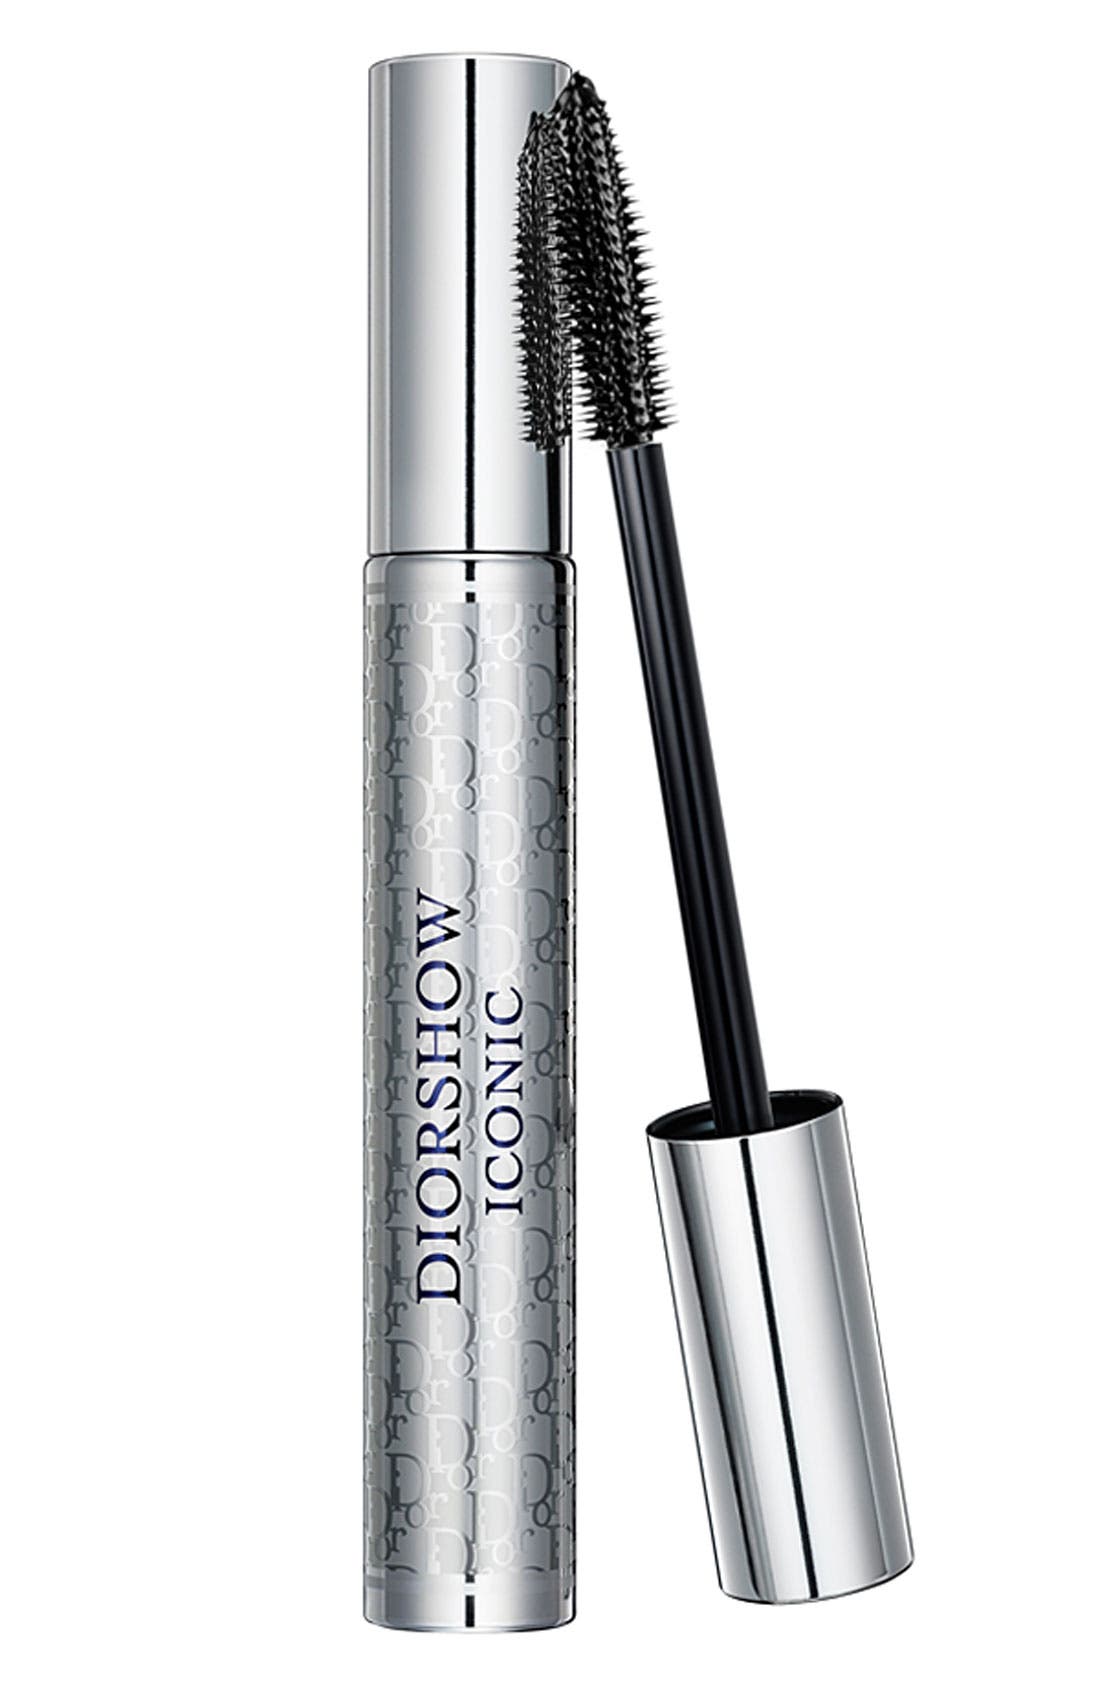 diorshow iconic high definition lash curler mascara